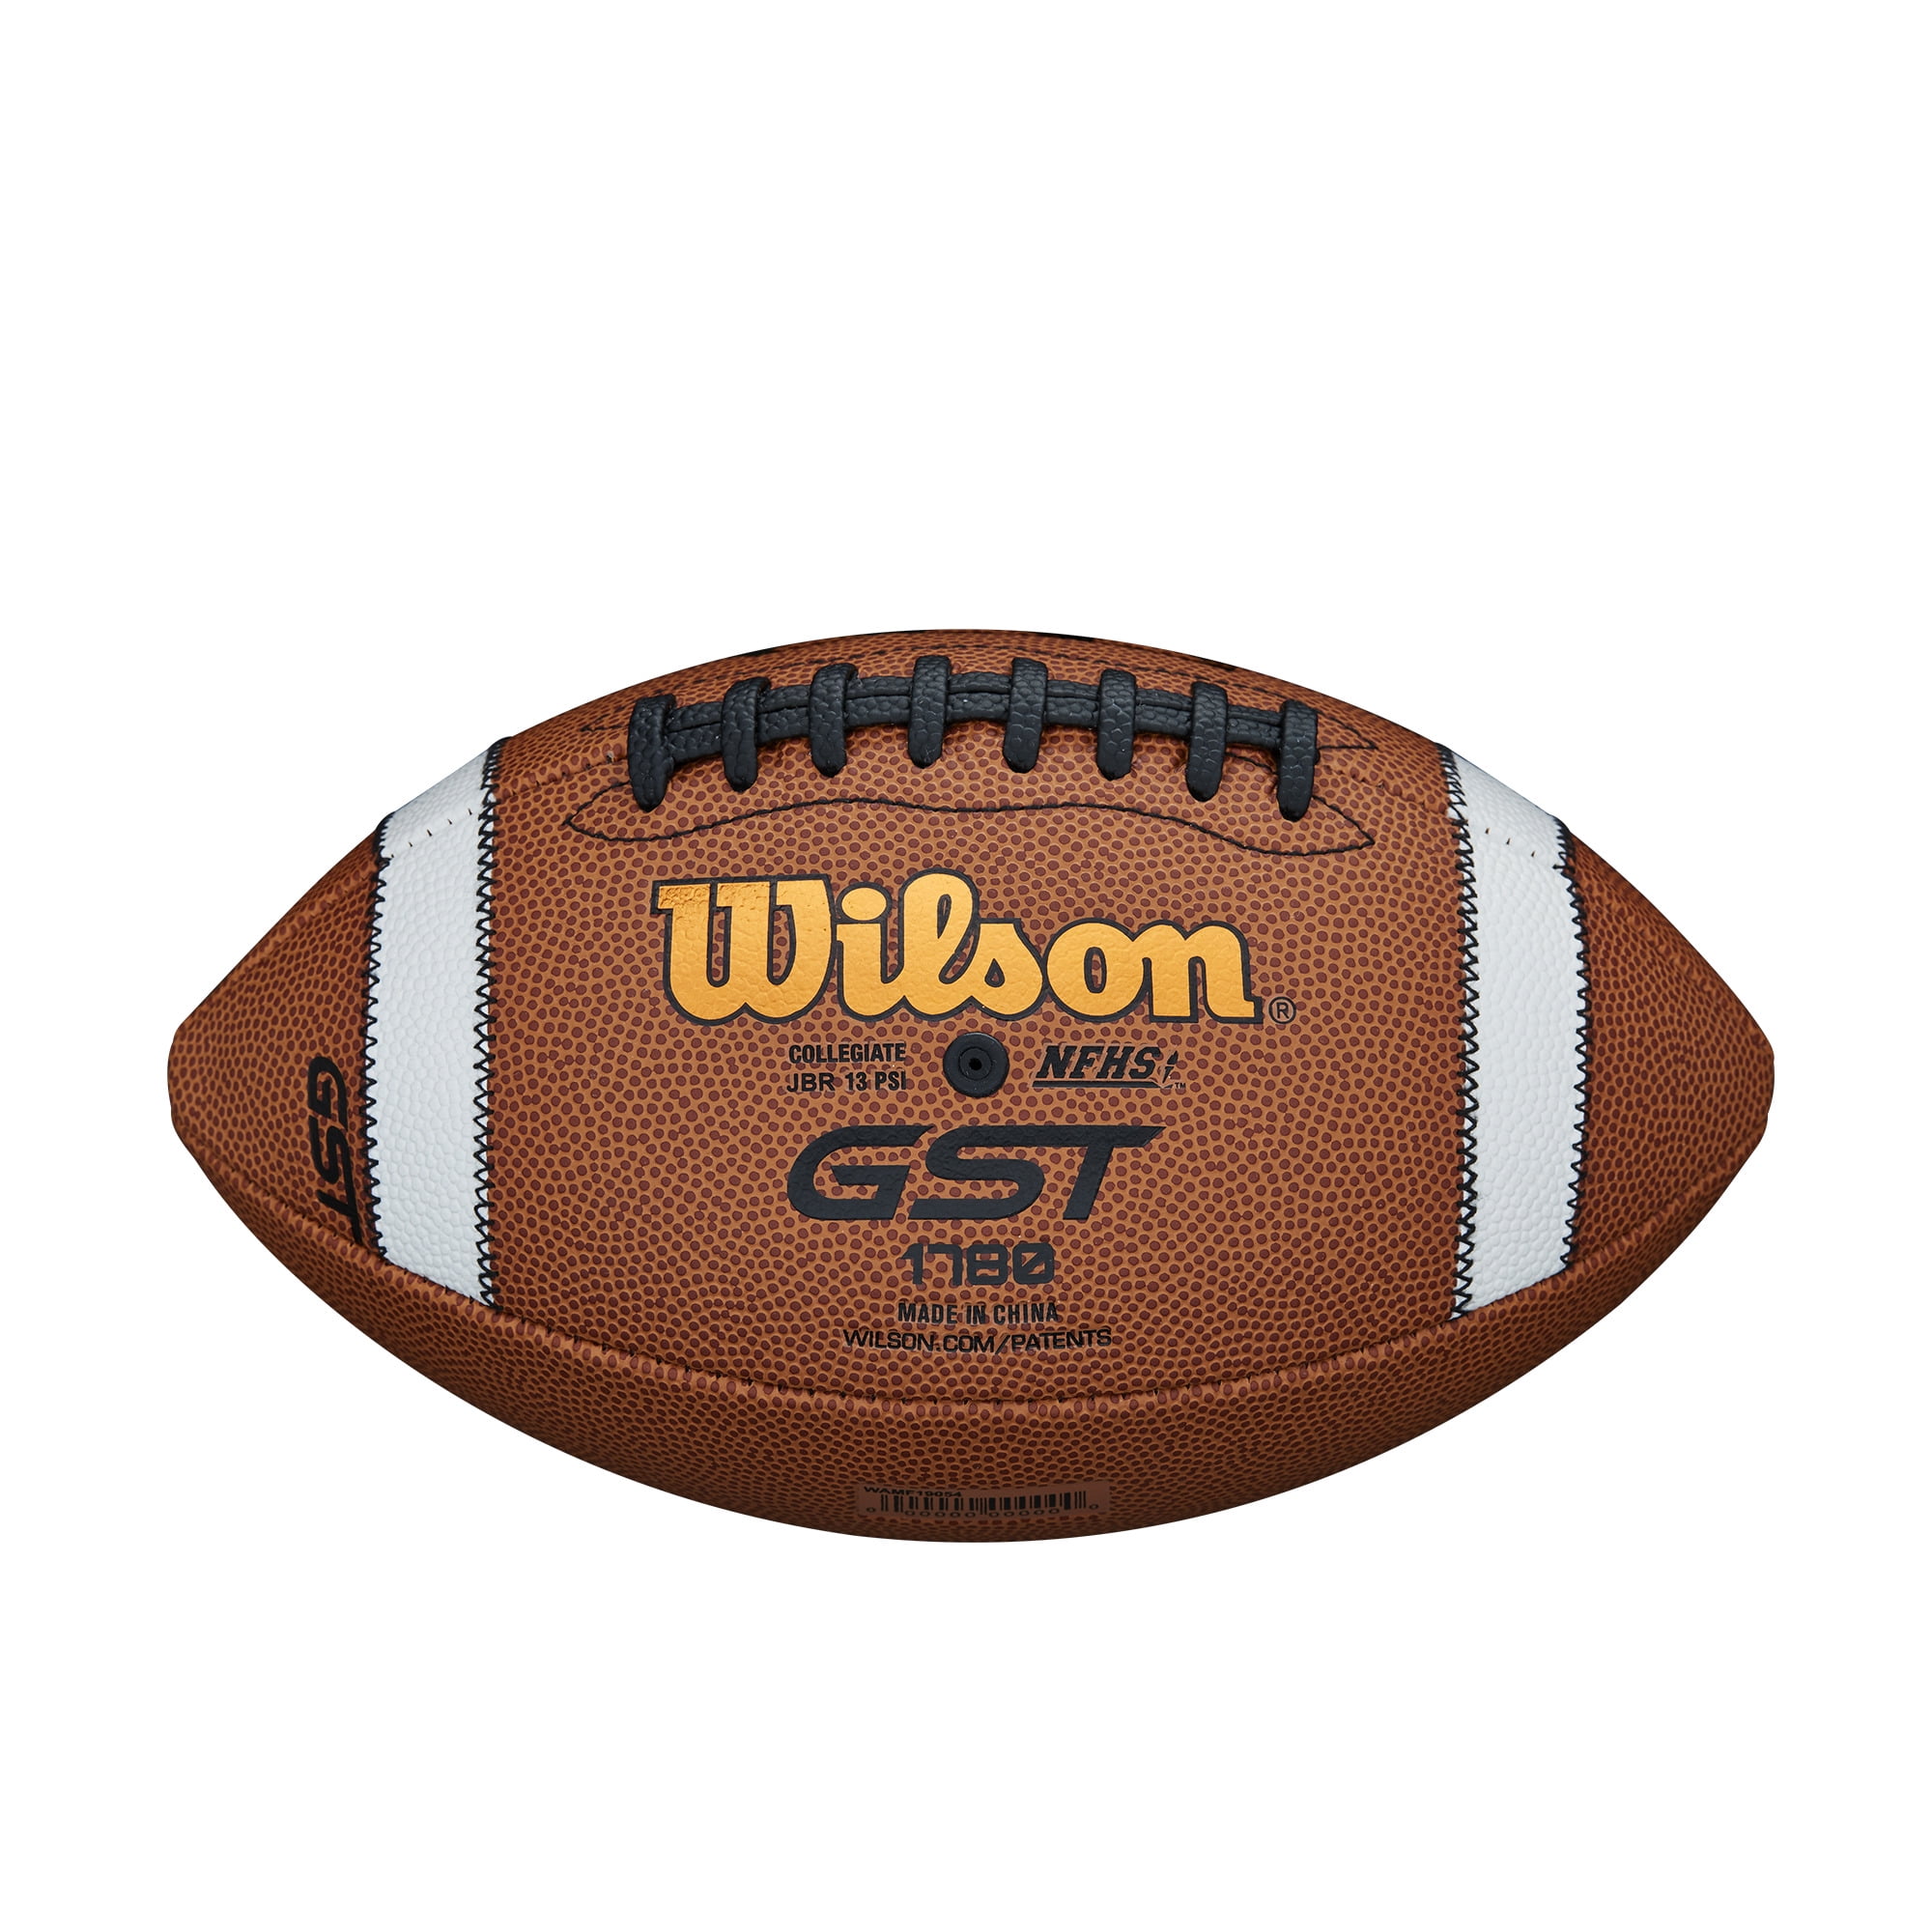 Wilson Adult GST football basketball 5 pad compression impact shirt 983500 M 